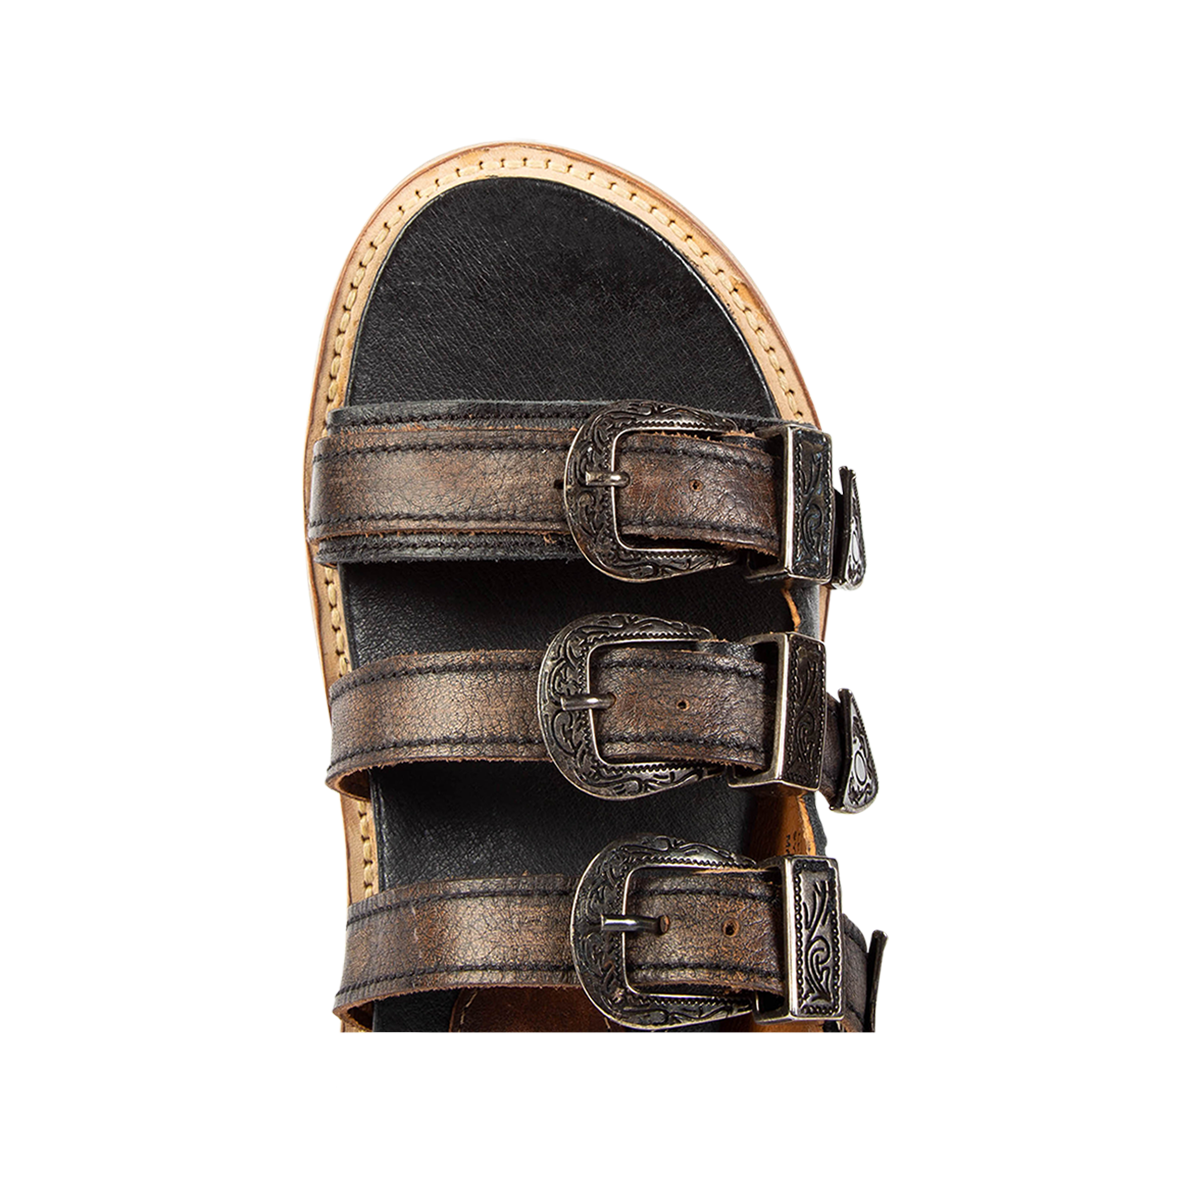 Top view showing round toe on FREEBIRD women's Franki black slip-on flat shoe featuring engraved metal detailing